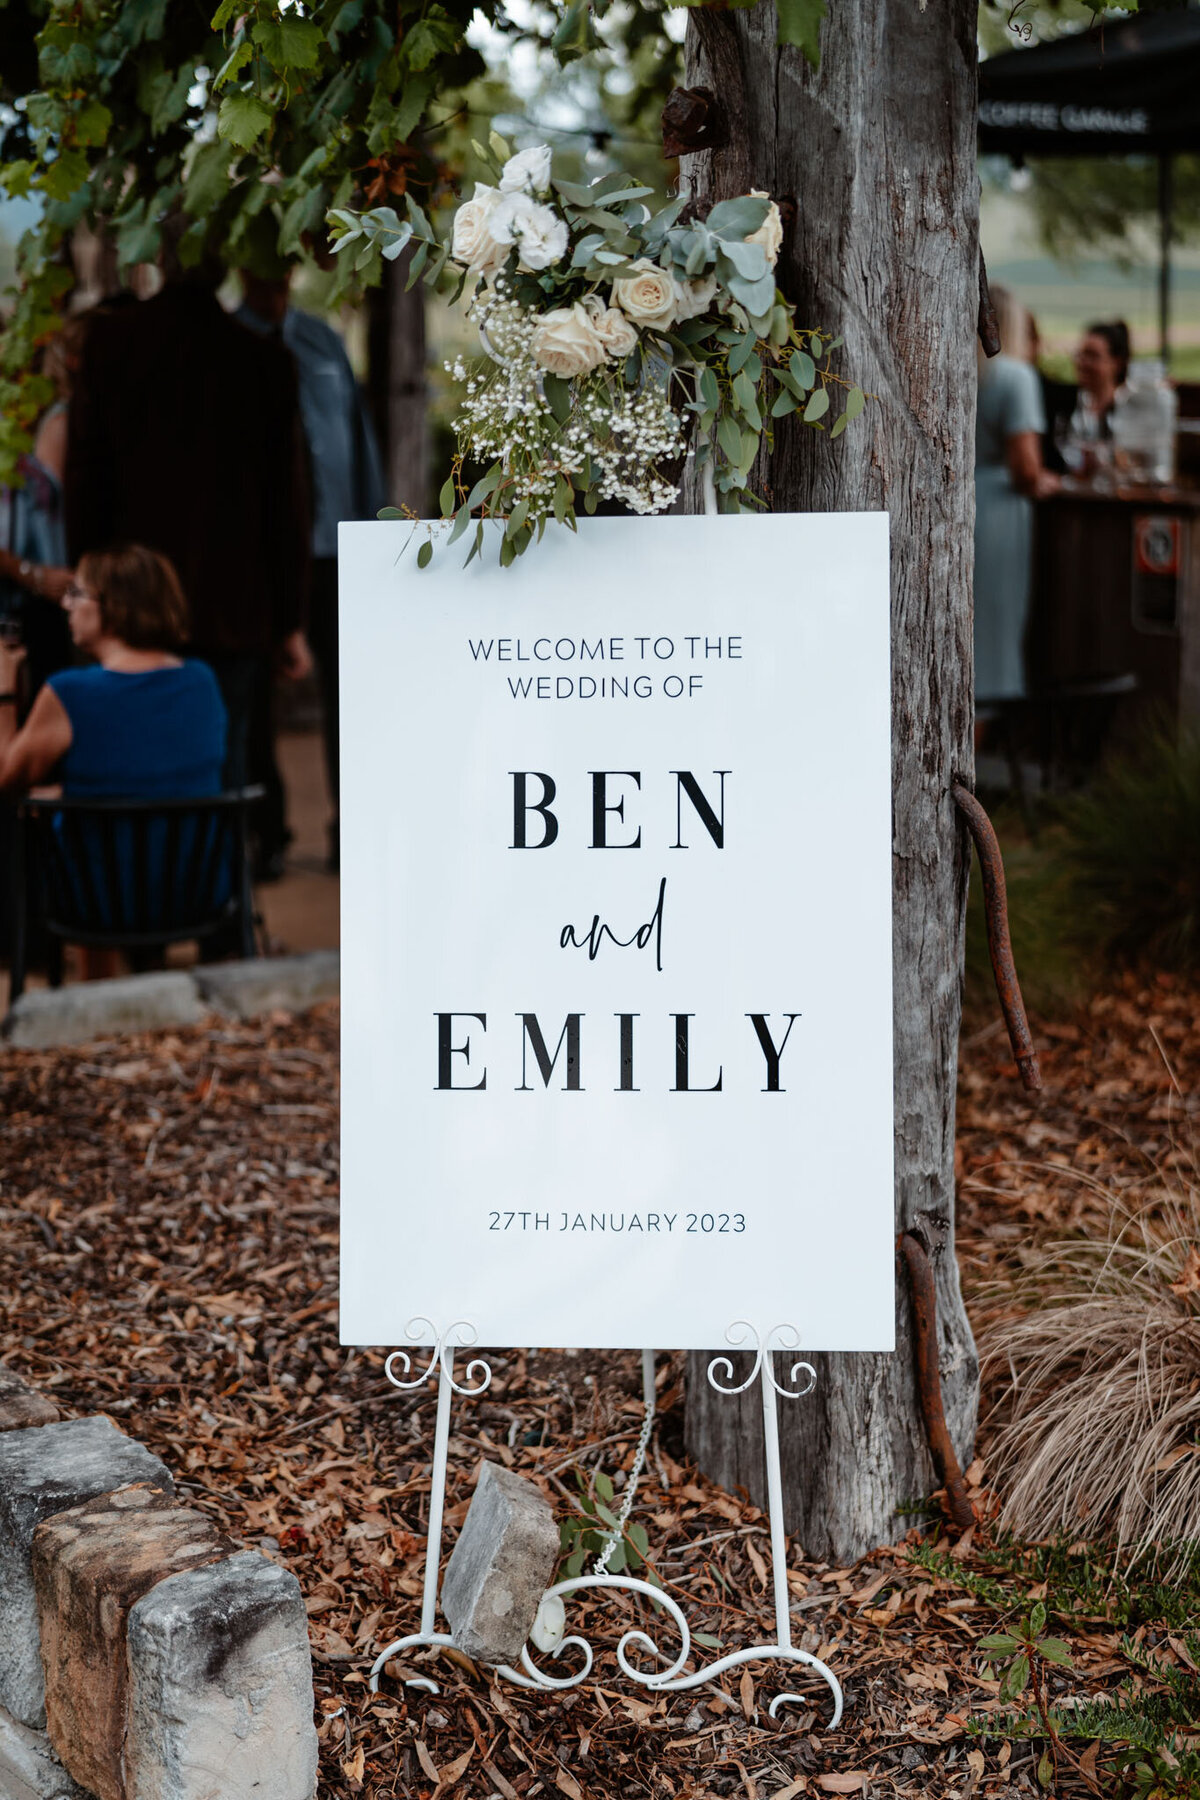 Emily & Ben's sign towards their wedding ceremony